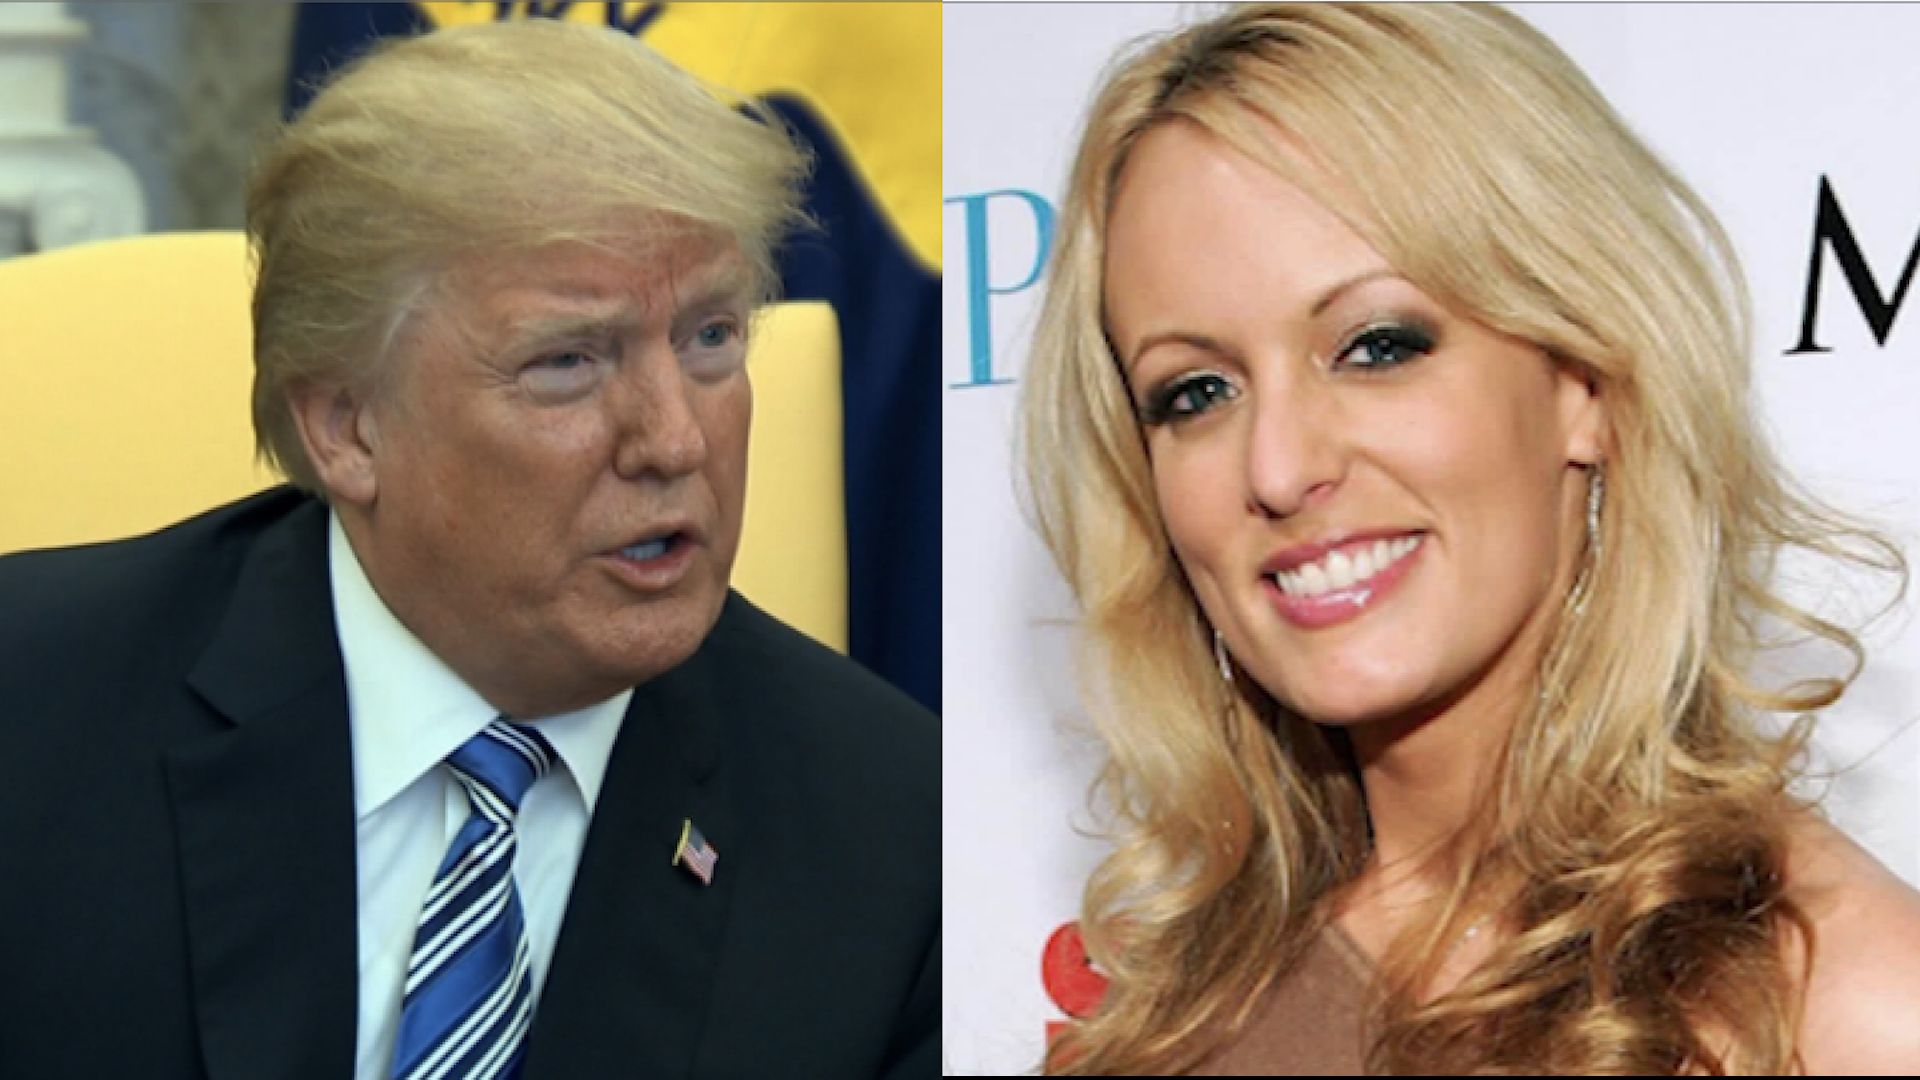 READ: Porn star Stormy Daniels' lawsuit against Donald Trump | CNN Politics